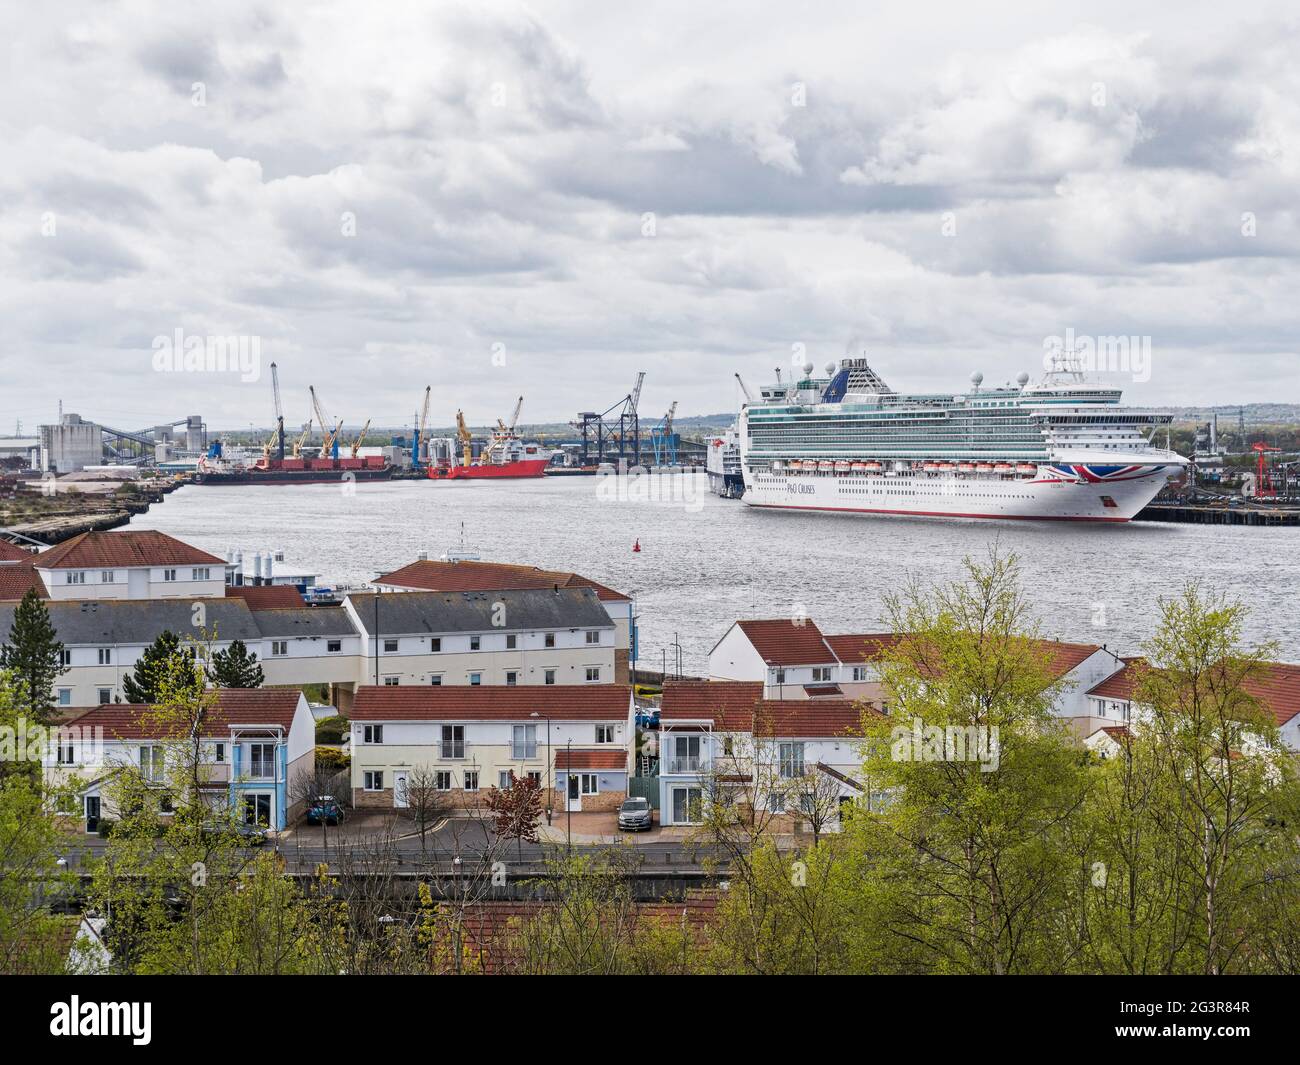 River Tyne mit Azura Cruise Liner und Arbeitskränen Stockfoto